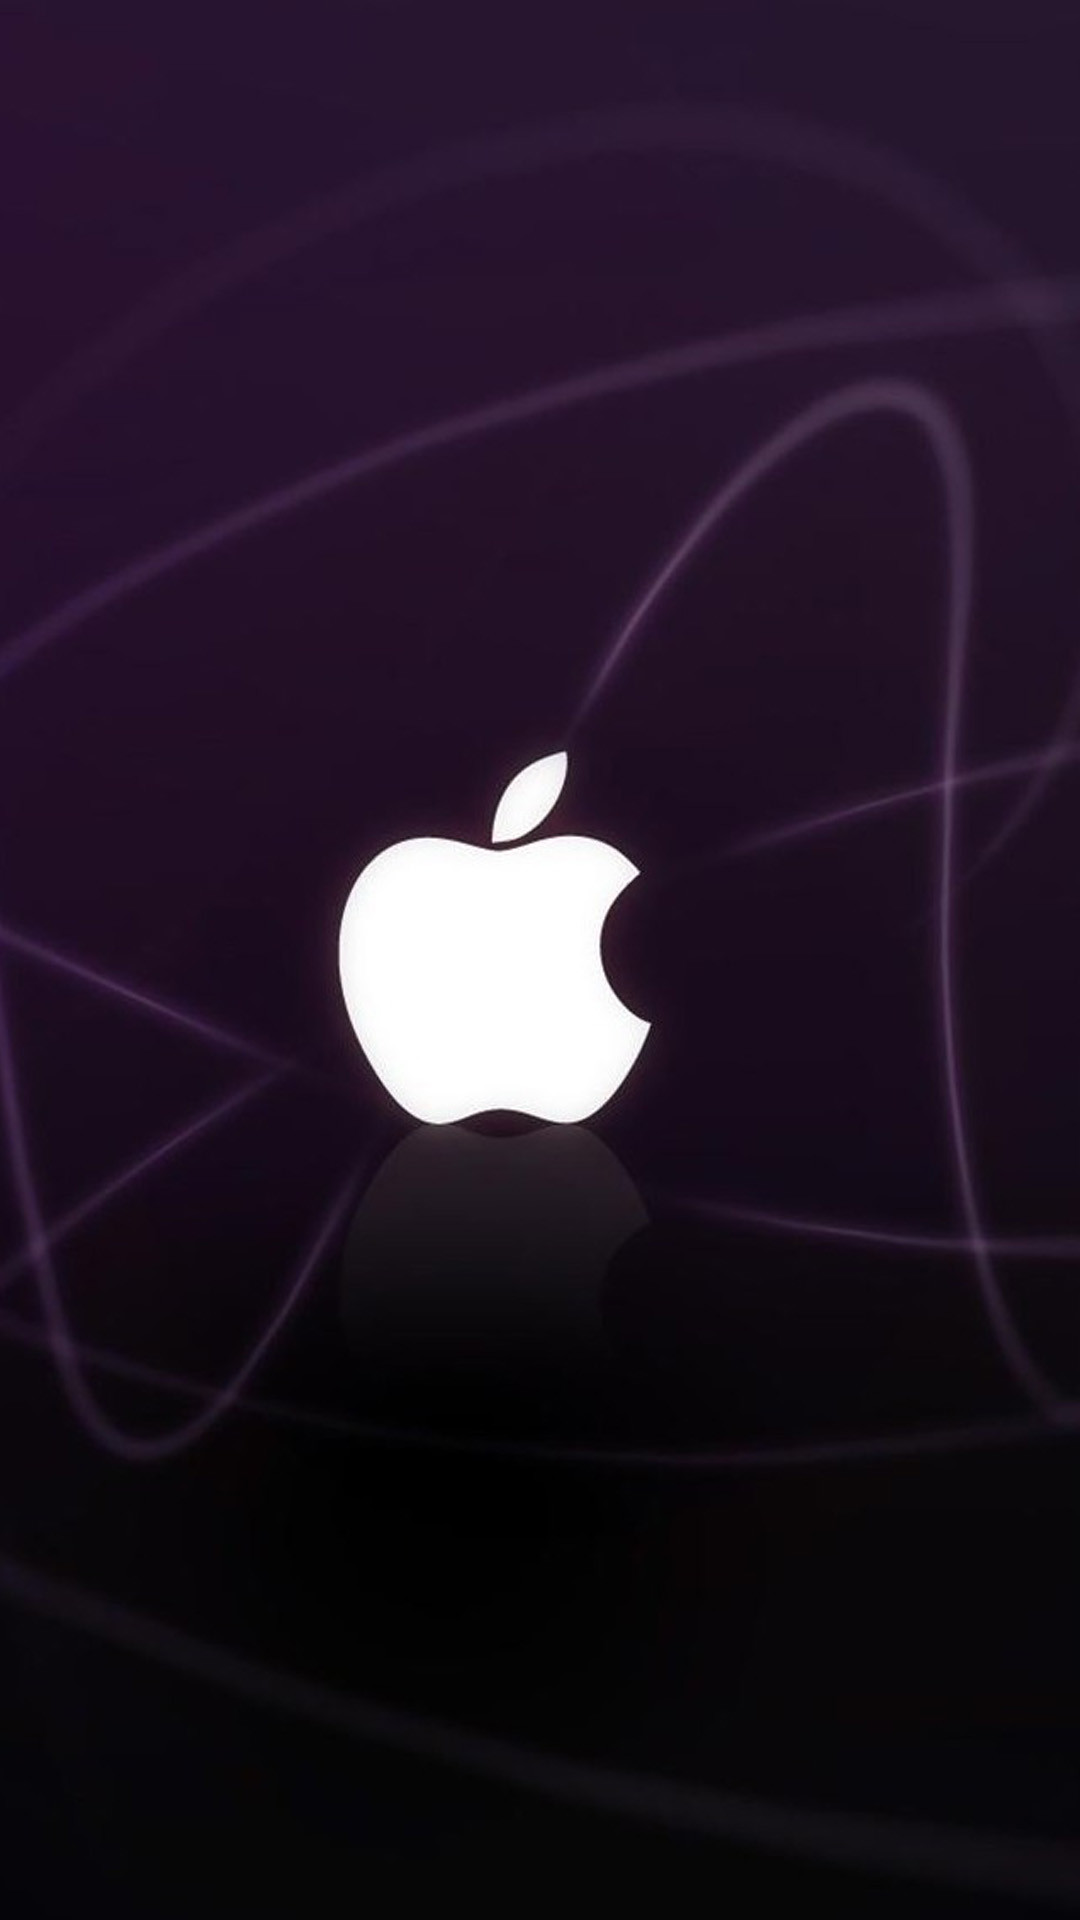 Apple оператор связи. Обои Apple. Заставка Эппл. Логотип айфона. Apple загрузка.